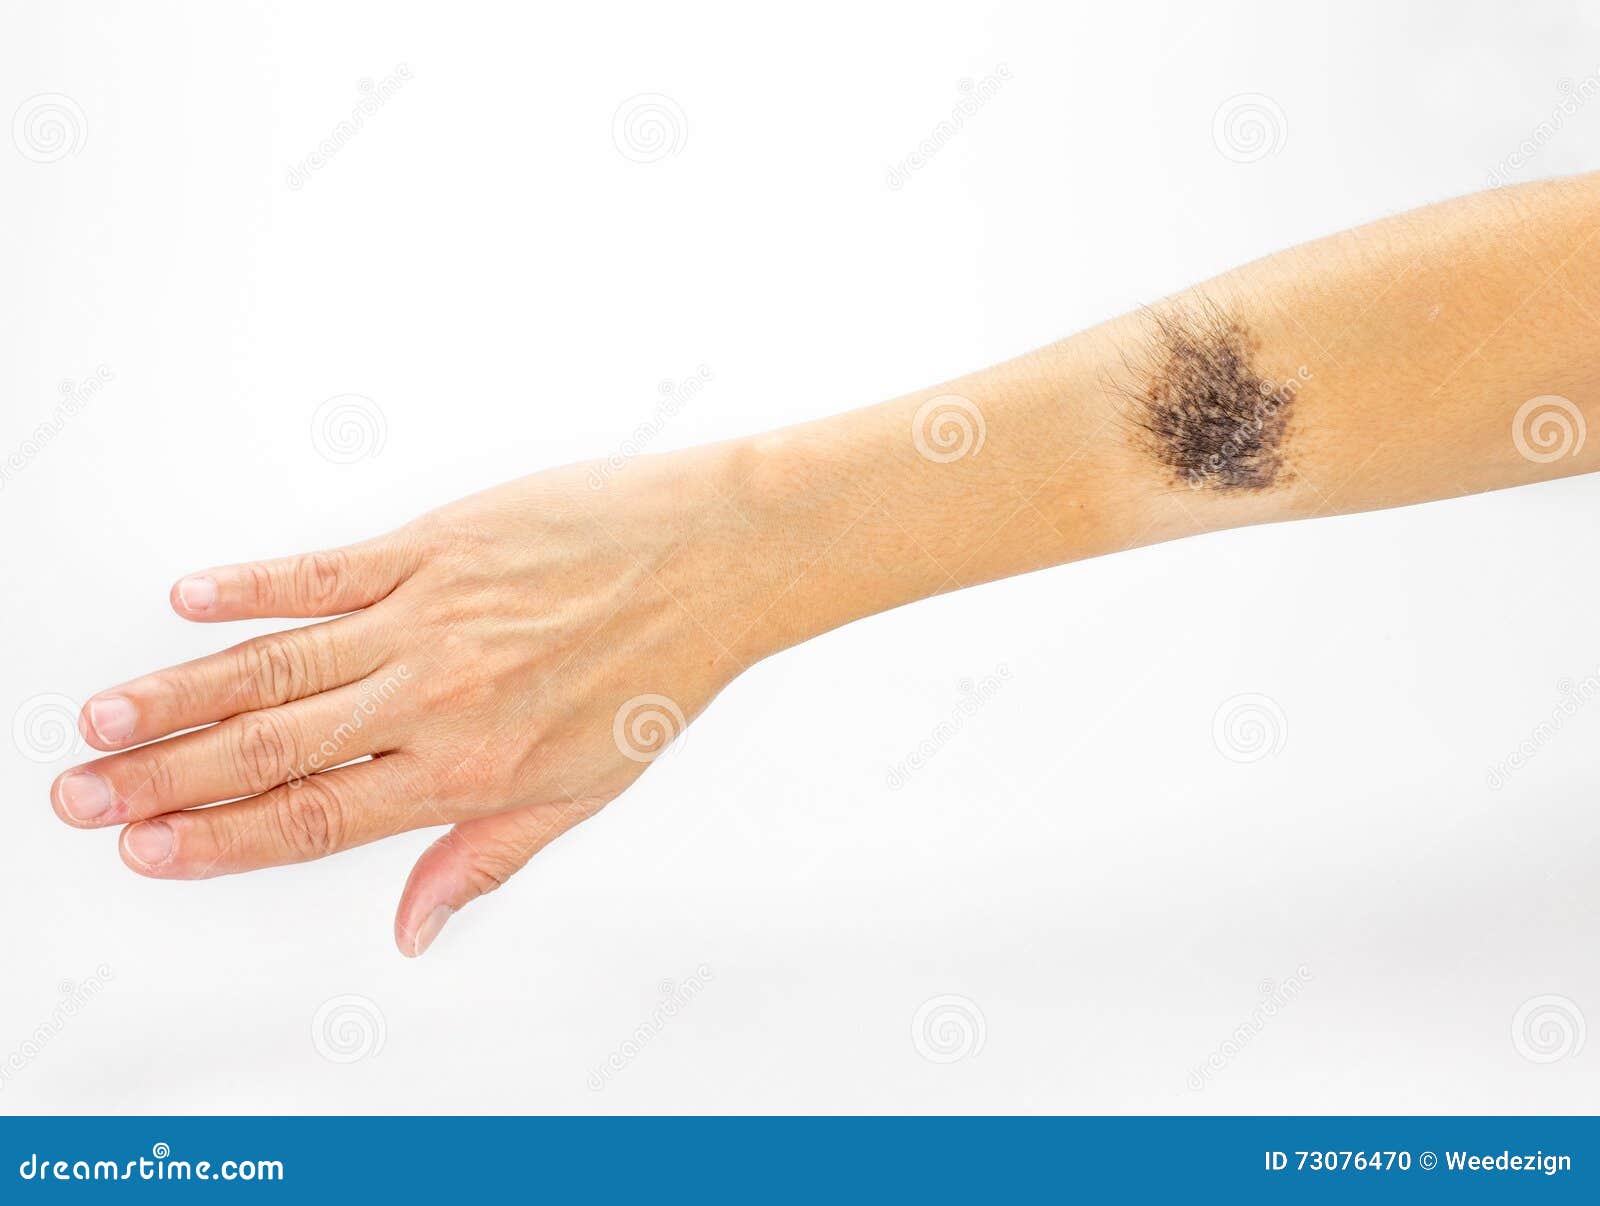 black birthmark on arm on white background